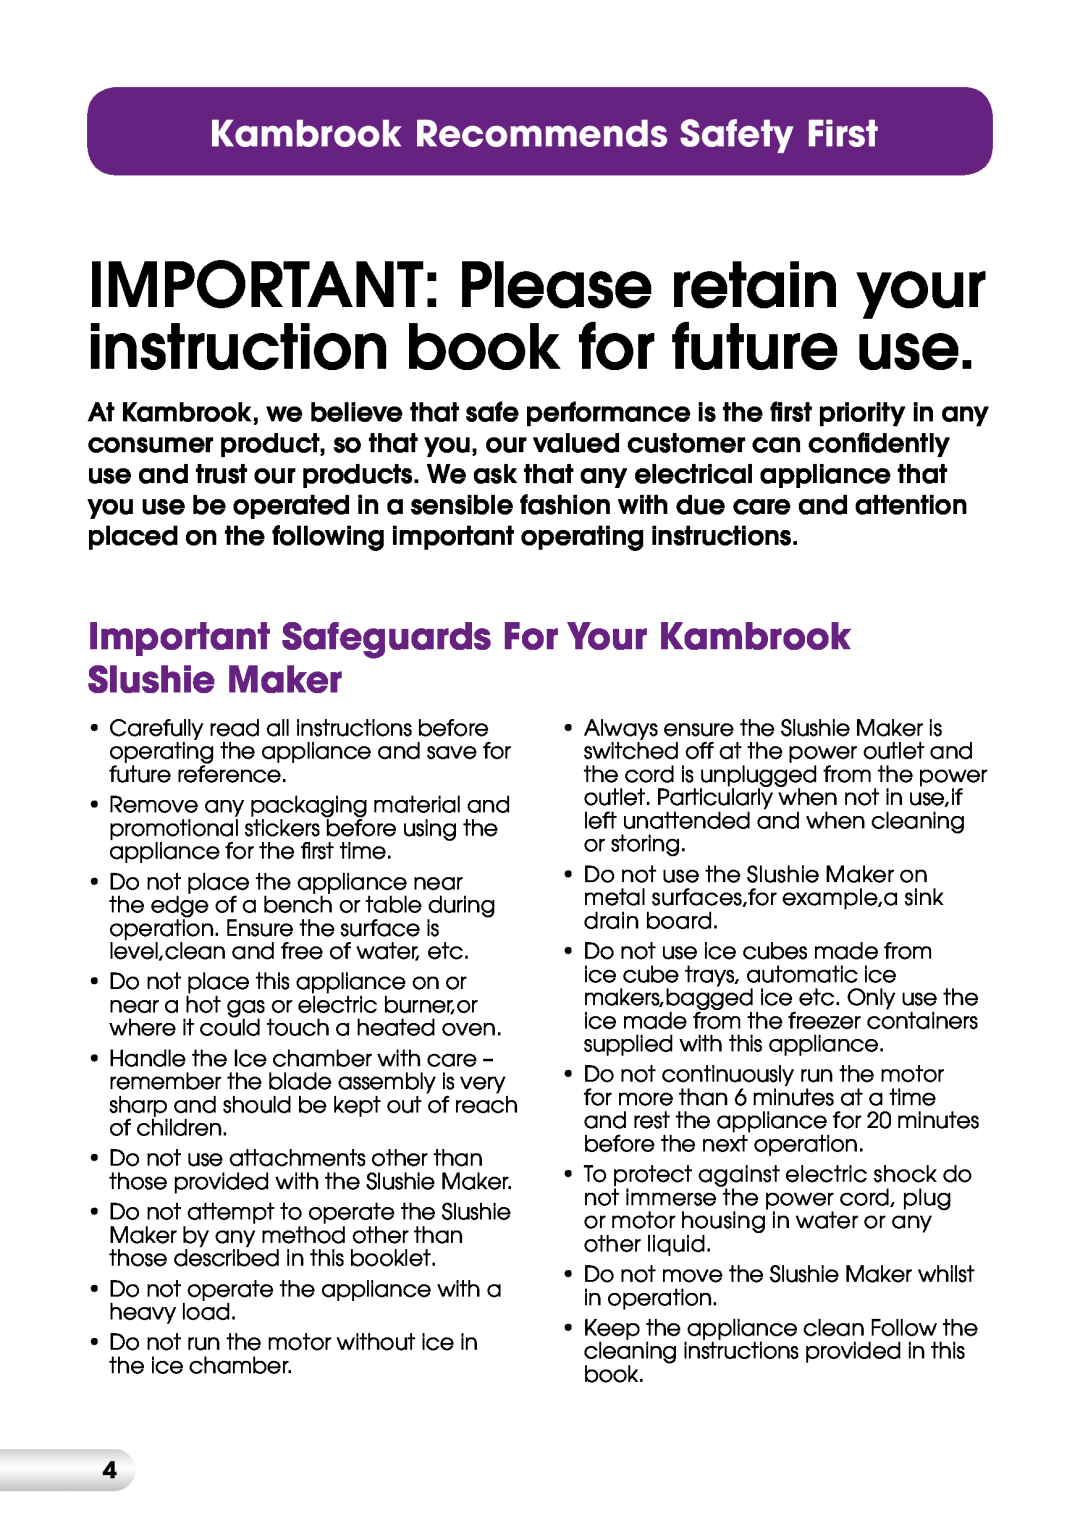 Kambrook KIS20 manual Important Safeguards For Your Kambrook Slushie Maker, Kambrook Recommends Safety First 